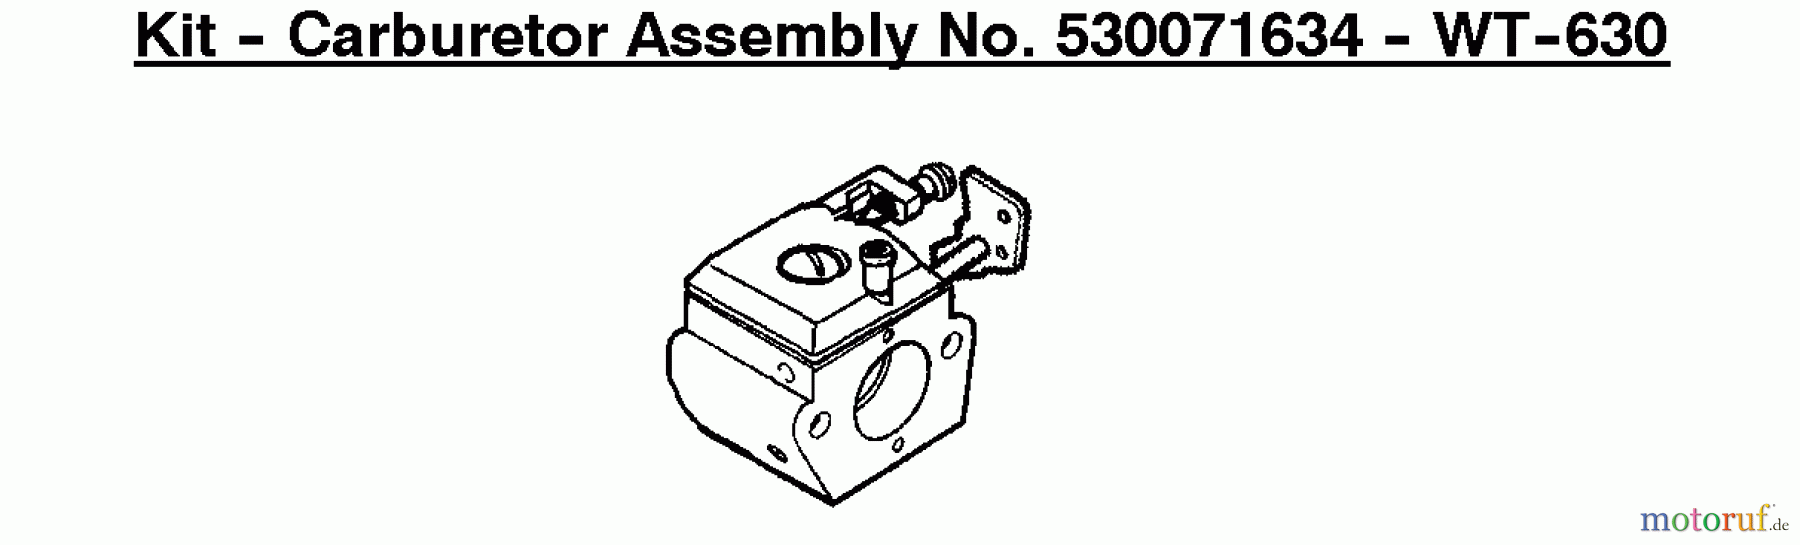  Poulan / Weed Eater Kantenschneider PE550 (Type 1) - Weed Eater Edger Kit - Carburetor Assembly